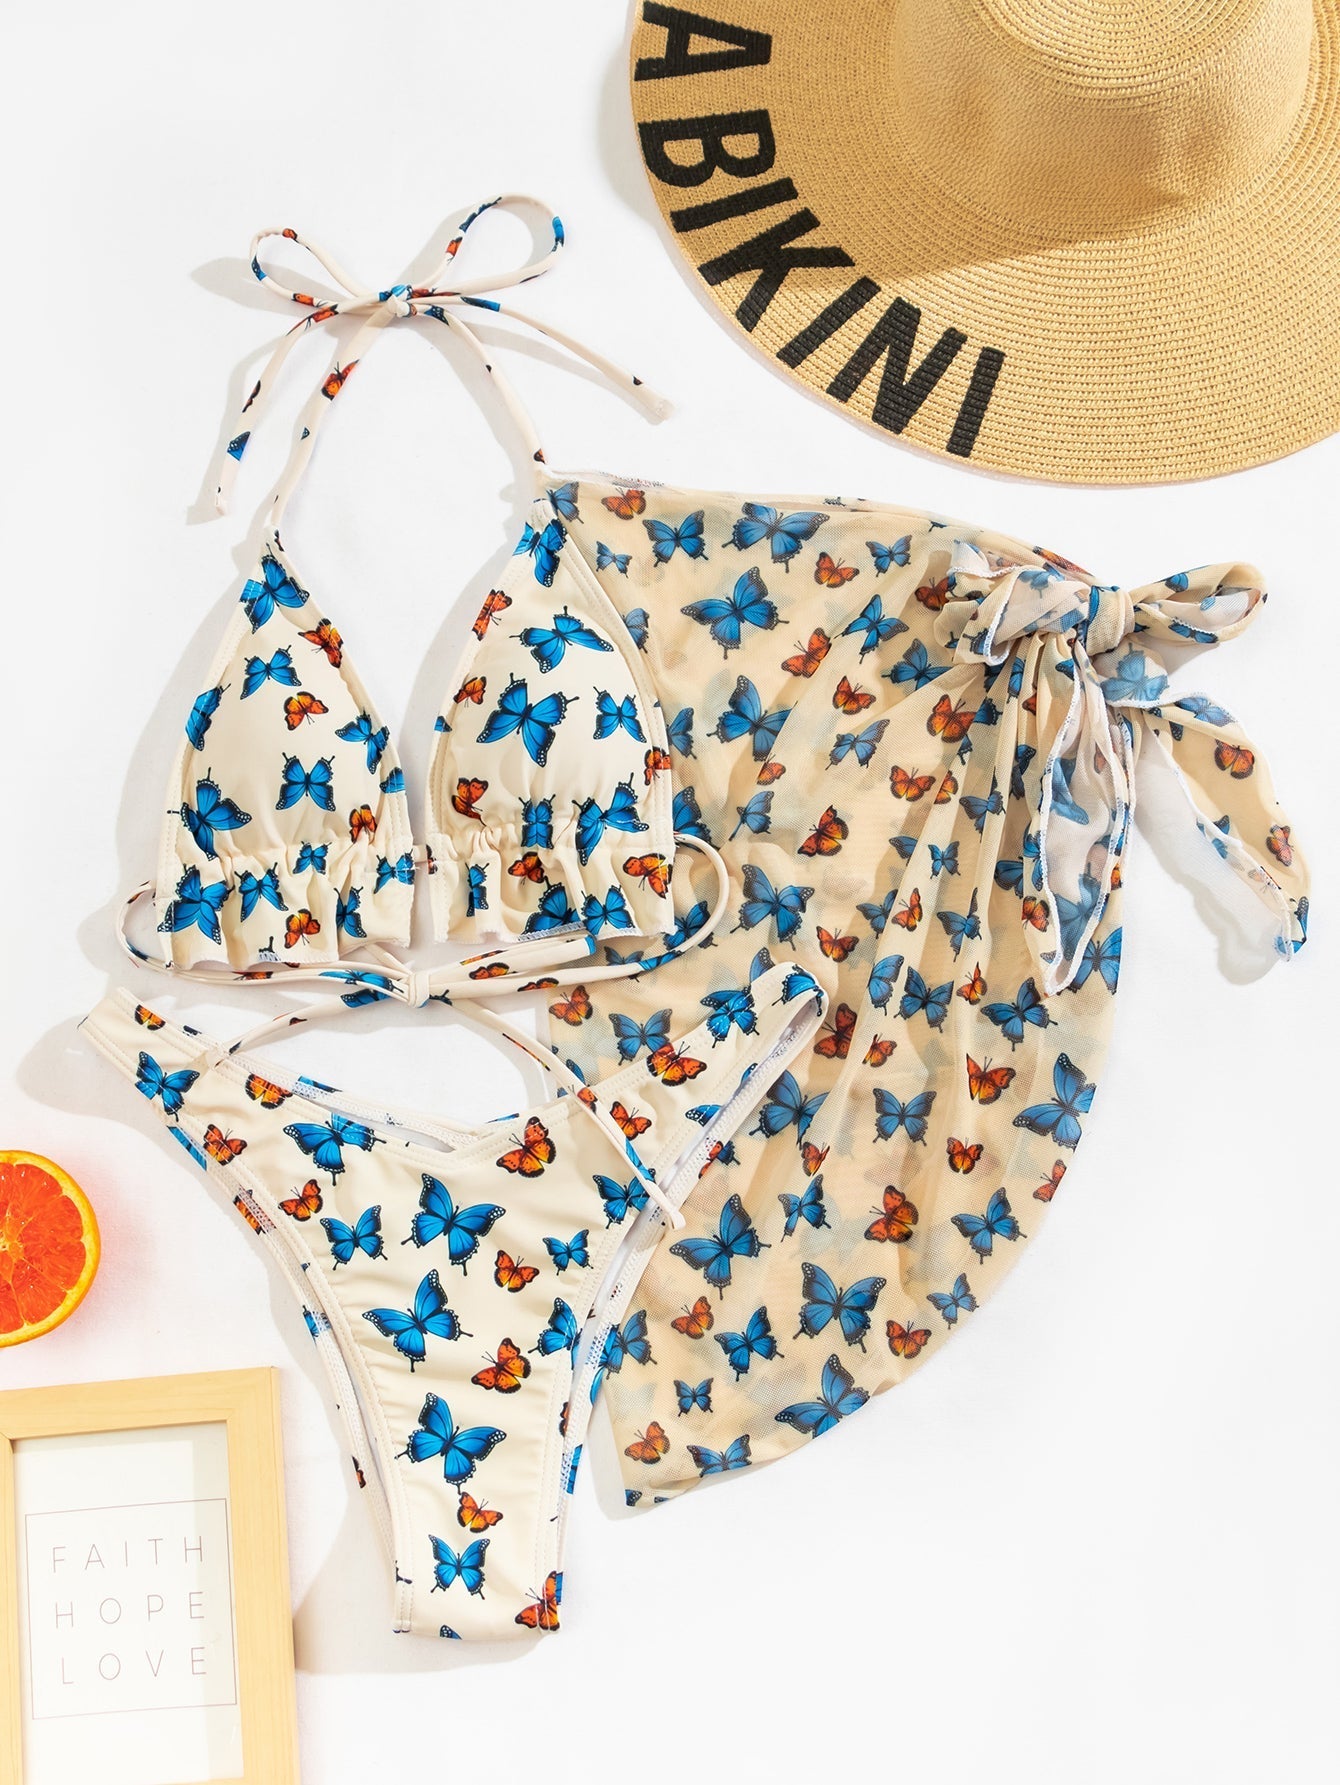 Women's butterfly Bikini Set 3 Pieces Set Swimsuits with Beach Skirt Cover Up Padded Swimwear, bathwear Sai Feel